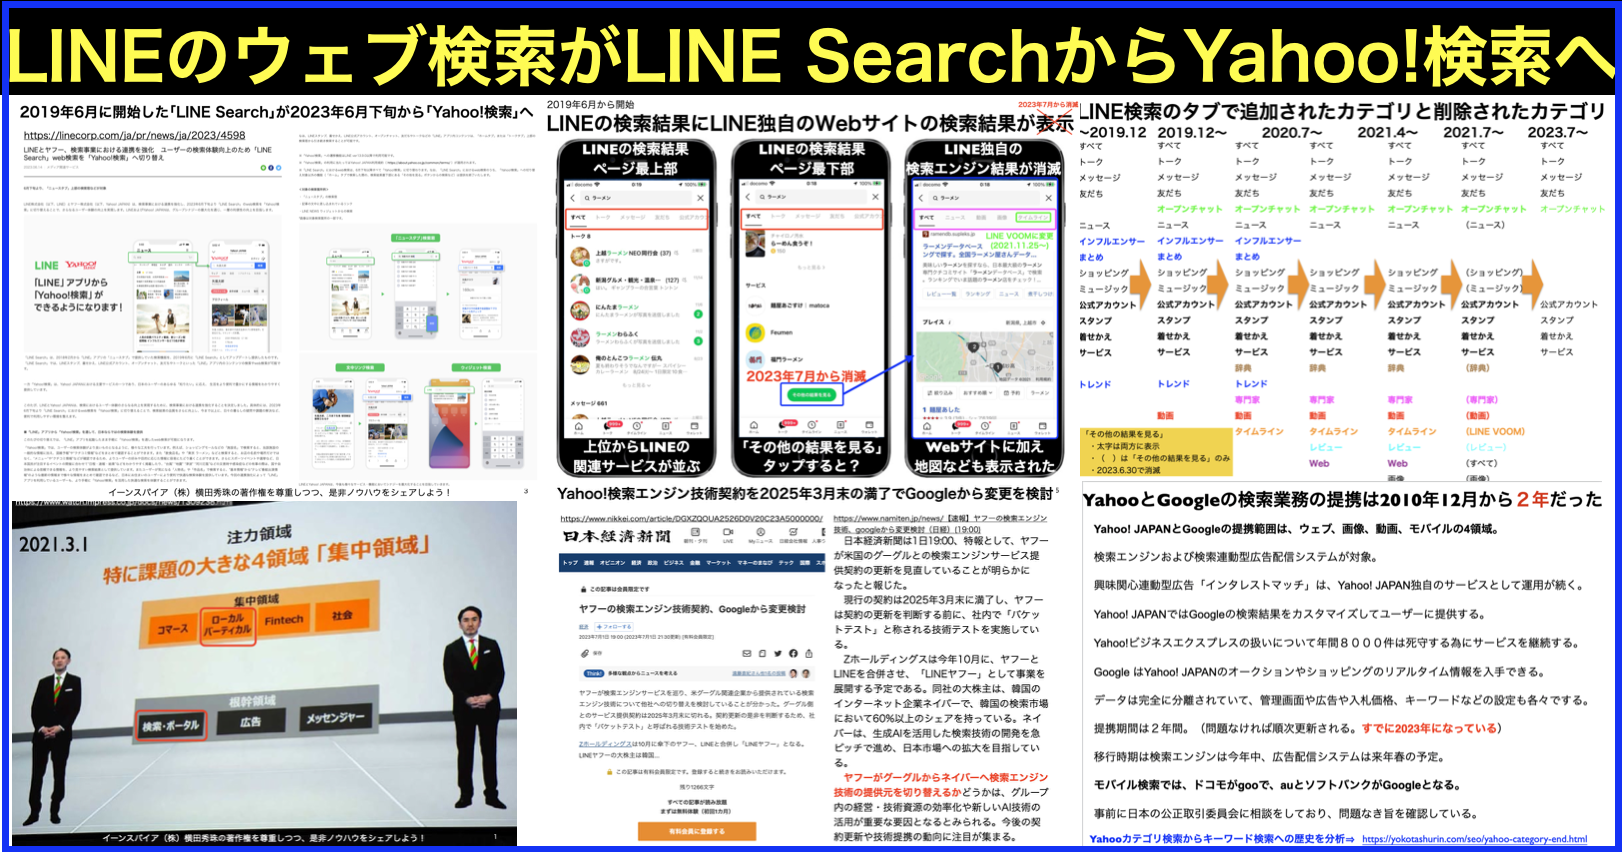 LINEのWeb検索がLINE SearchからYahoo!検索へ